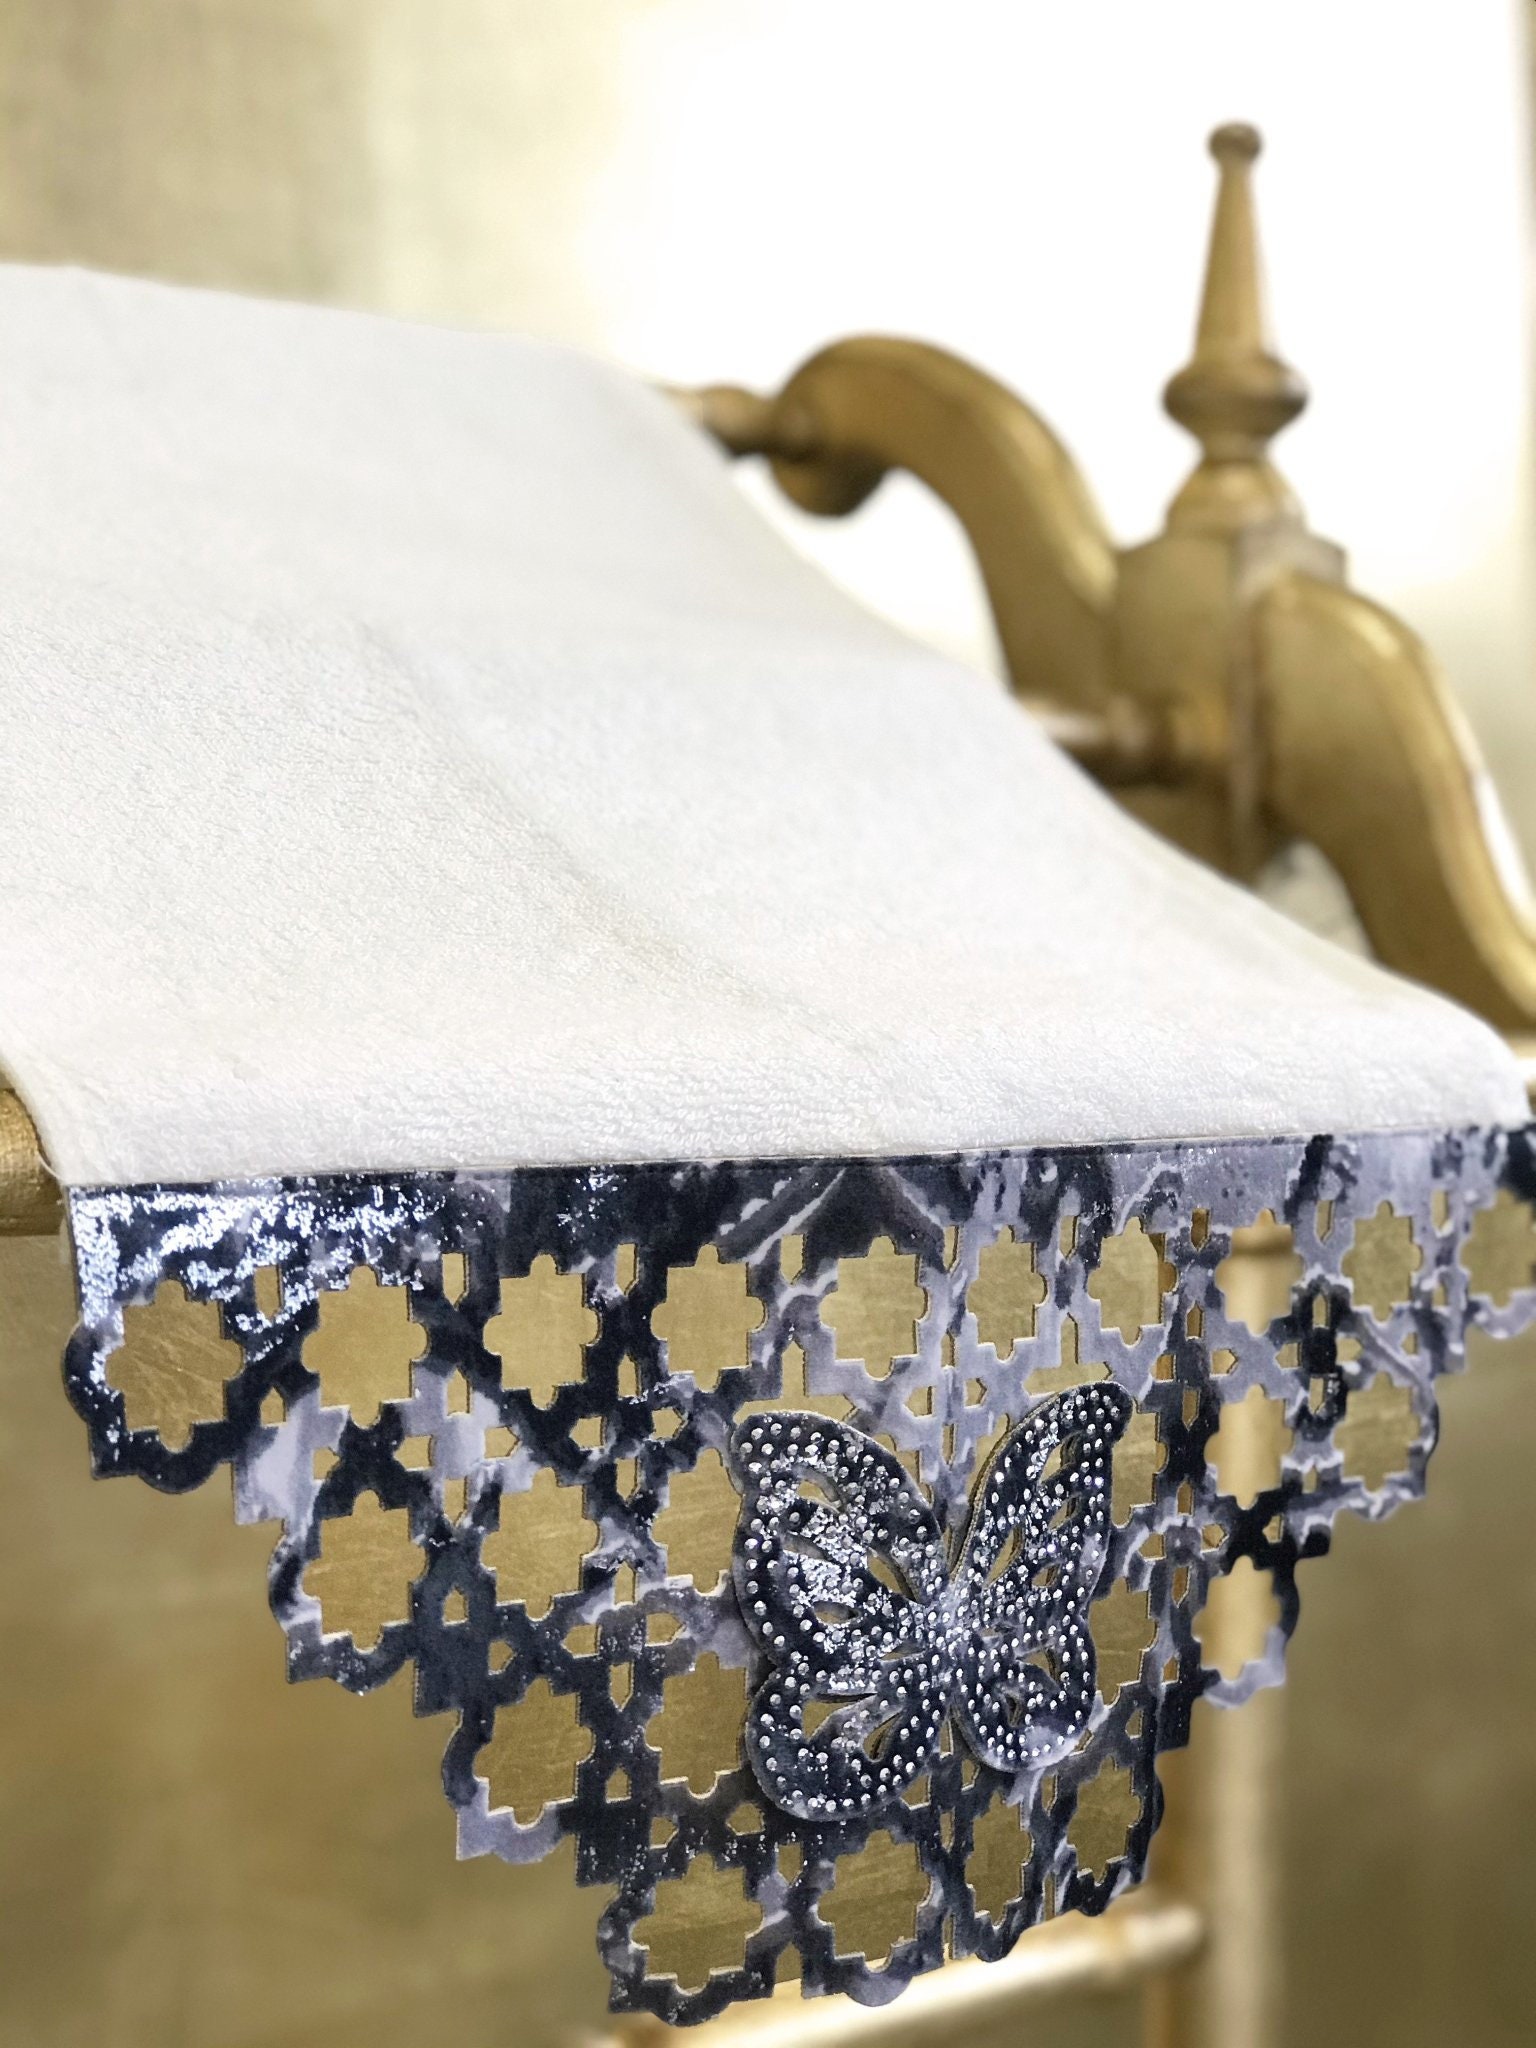 Idil Towel Set Luxury Decorative Towels Embroidery Lace Towels Bath Towel  Set Elegant Spa Towels Organic Bamboo Turkish Towels 